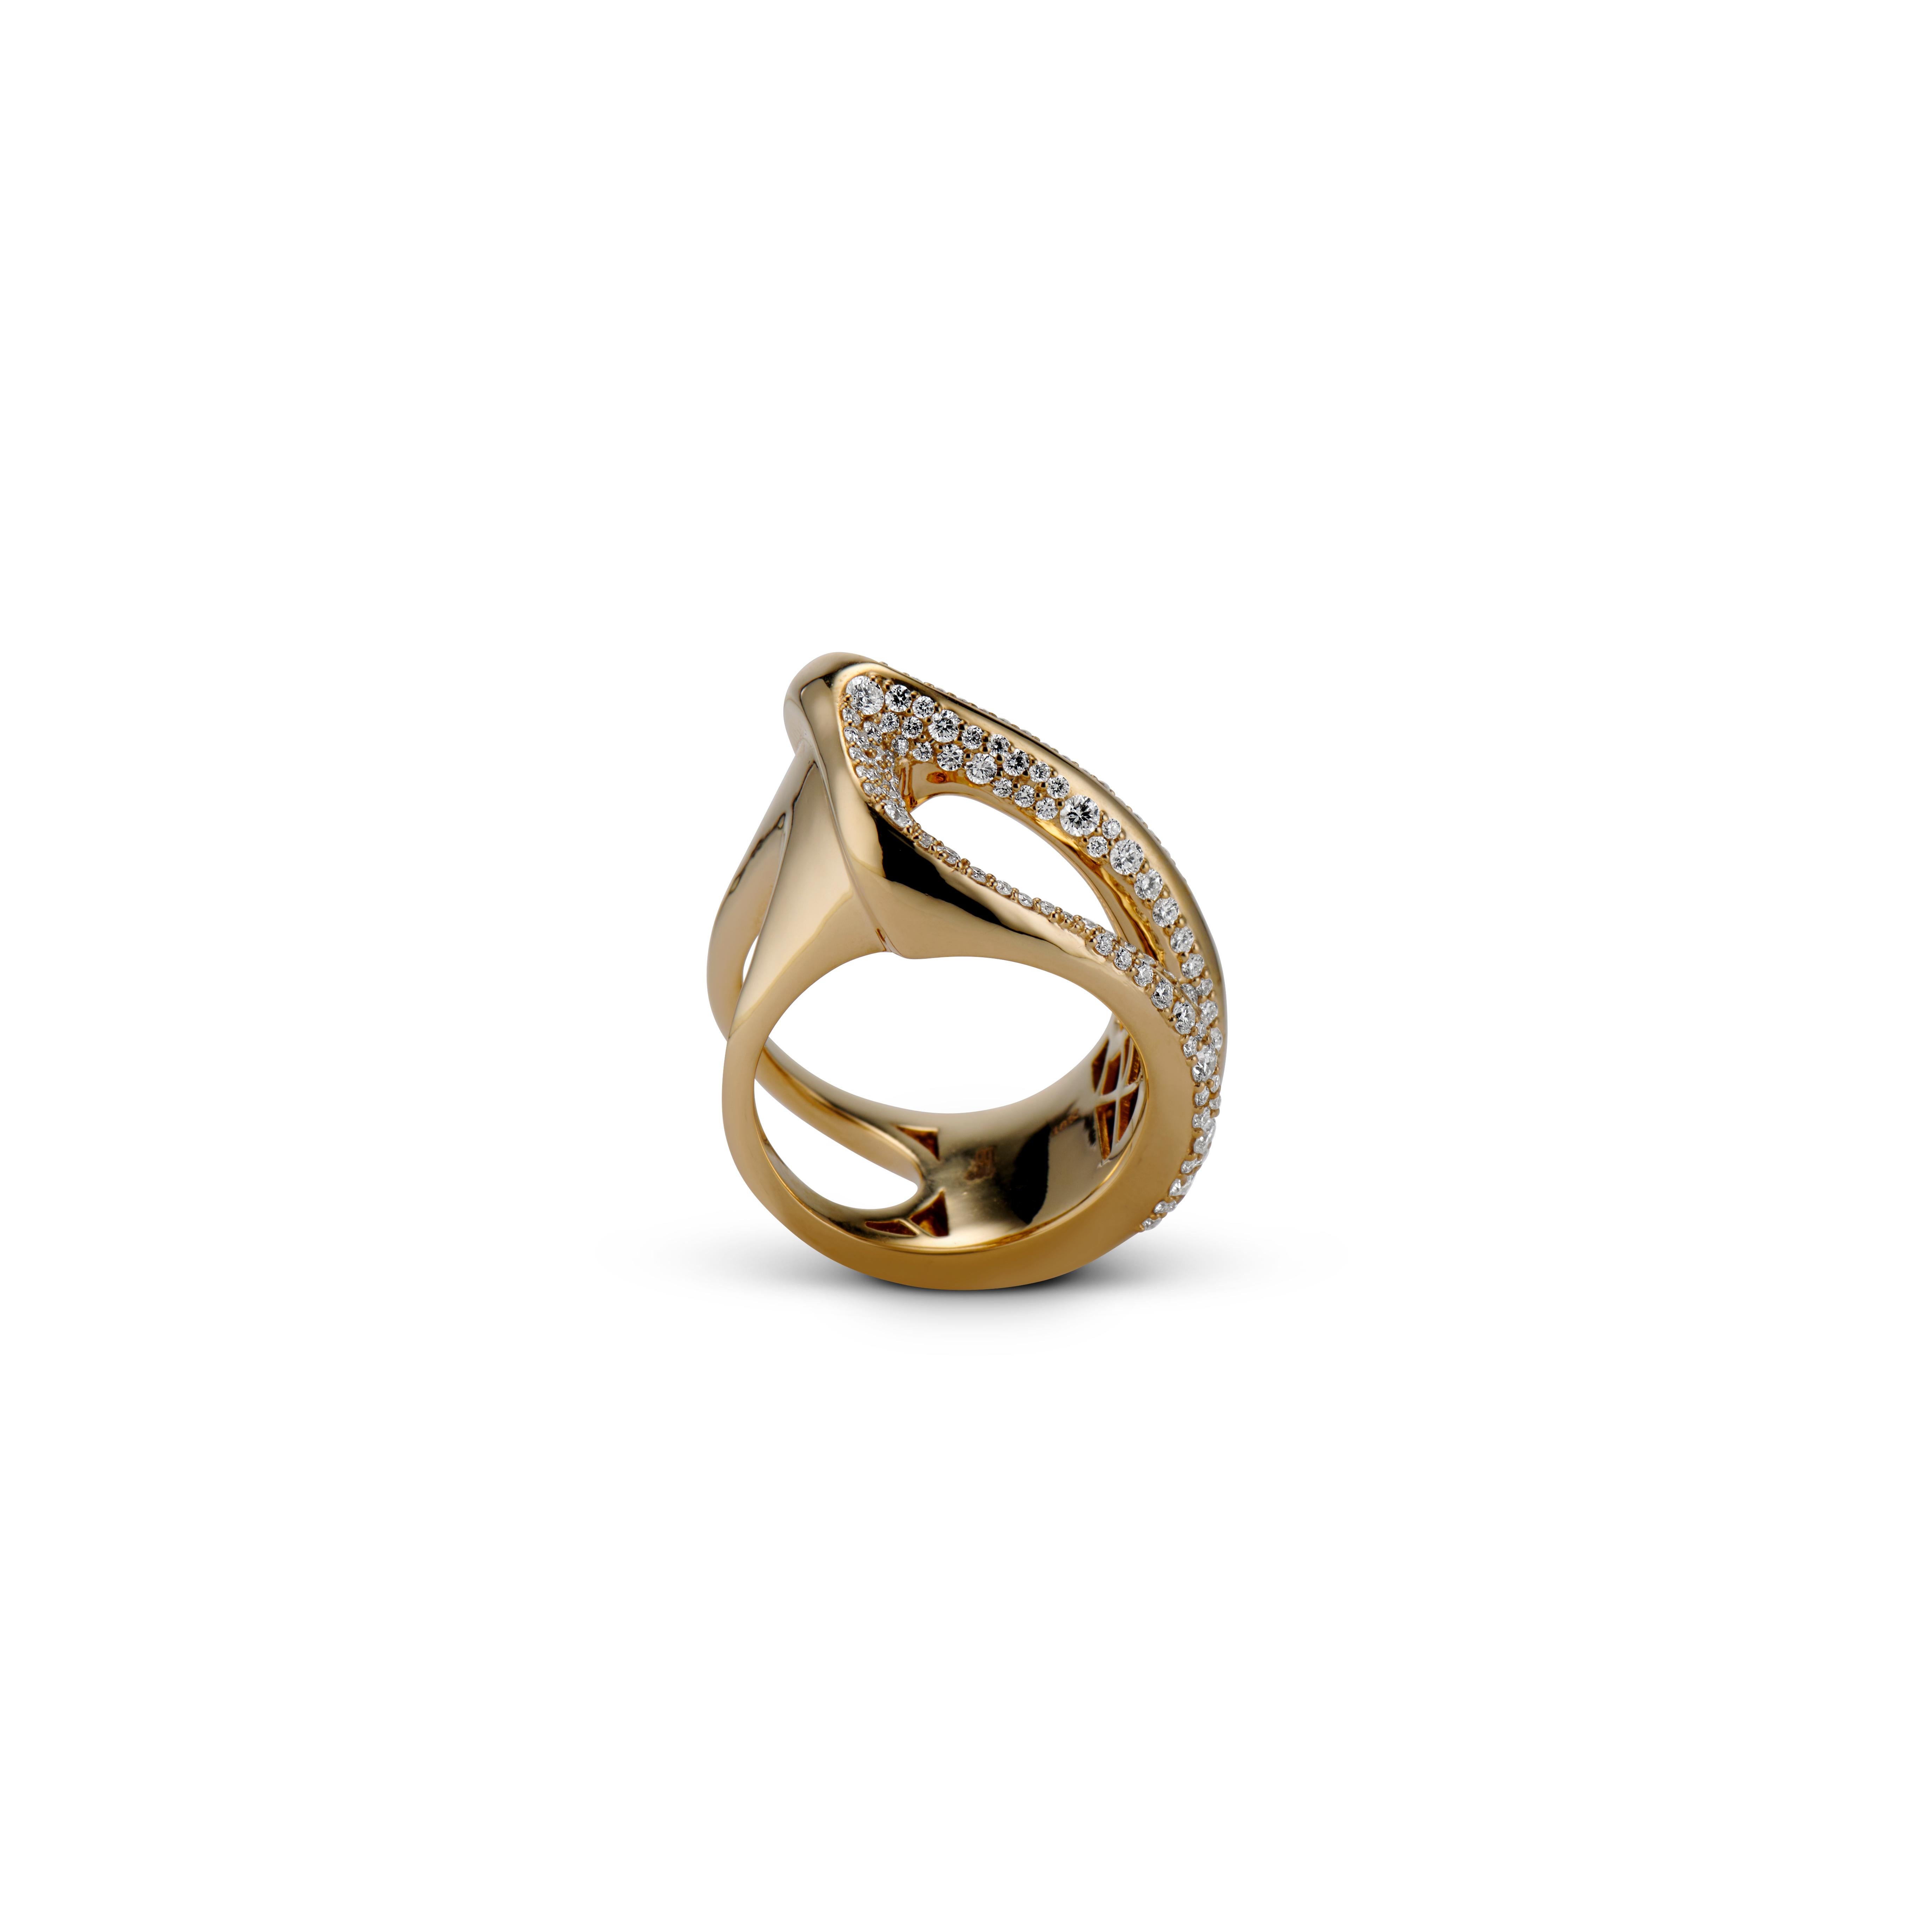 JV Insardi 18 Karat Gold Sculptural Ring with White Diamonds 2